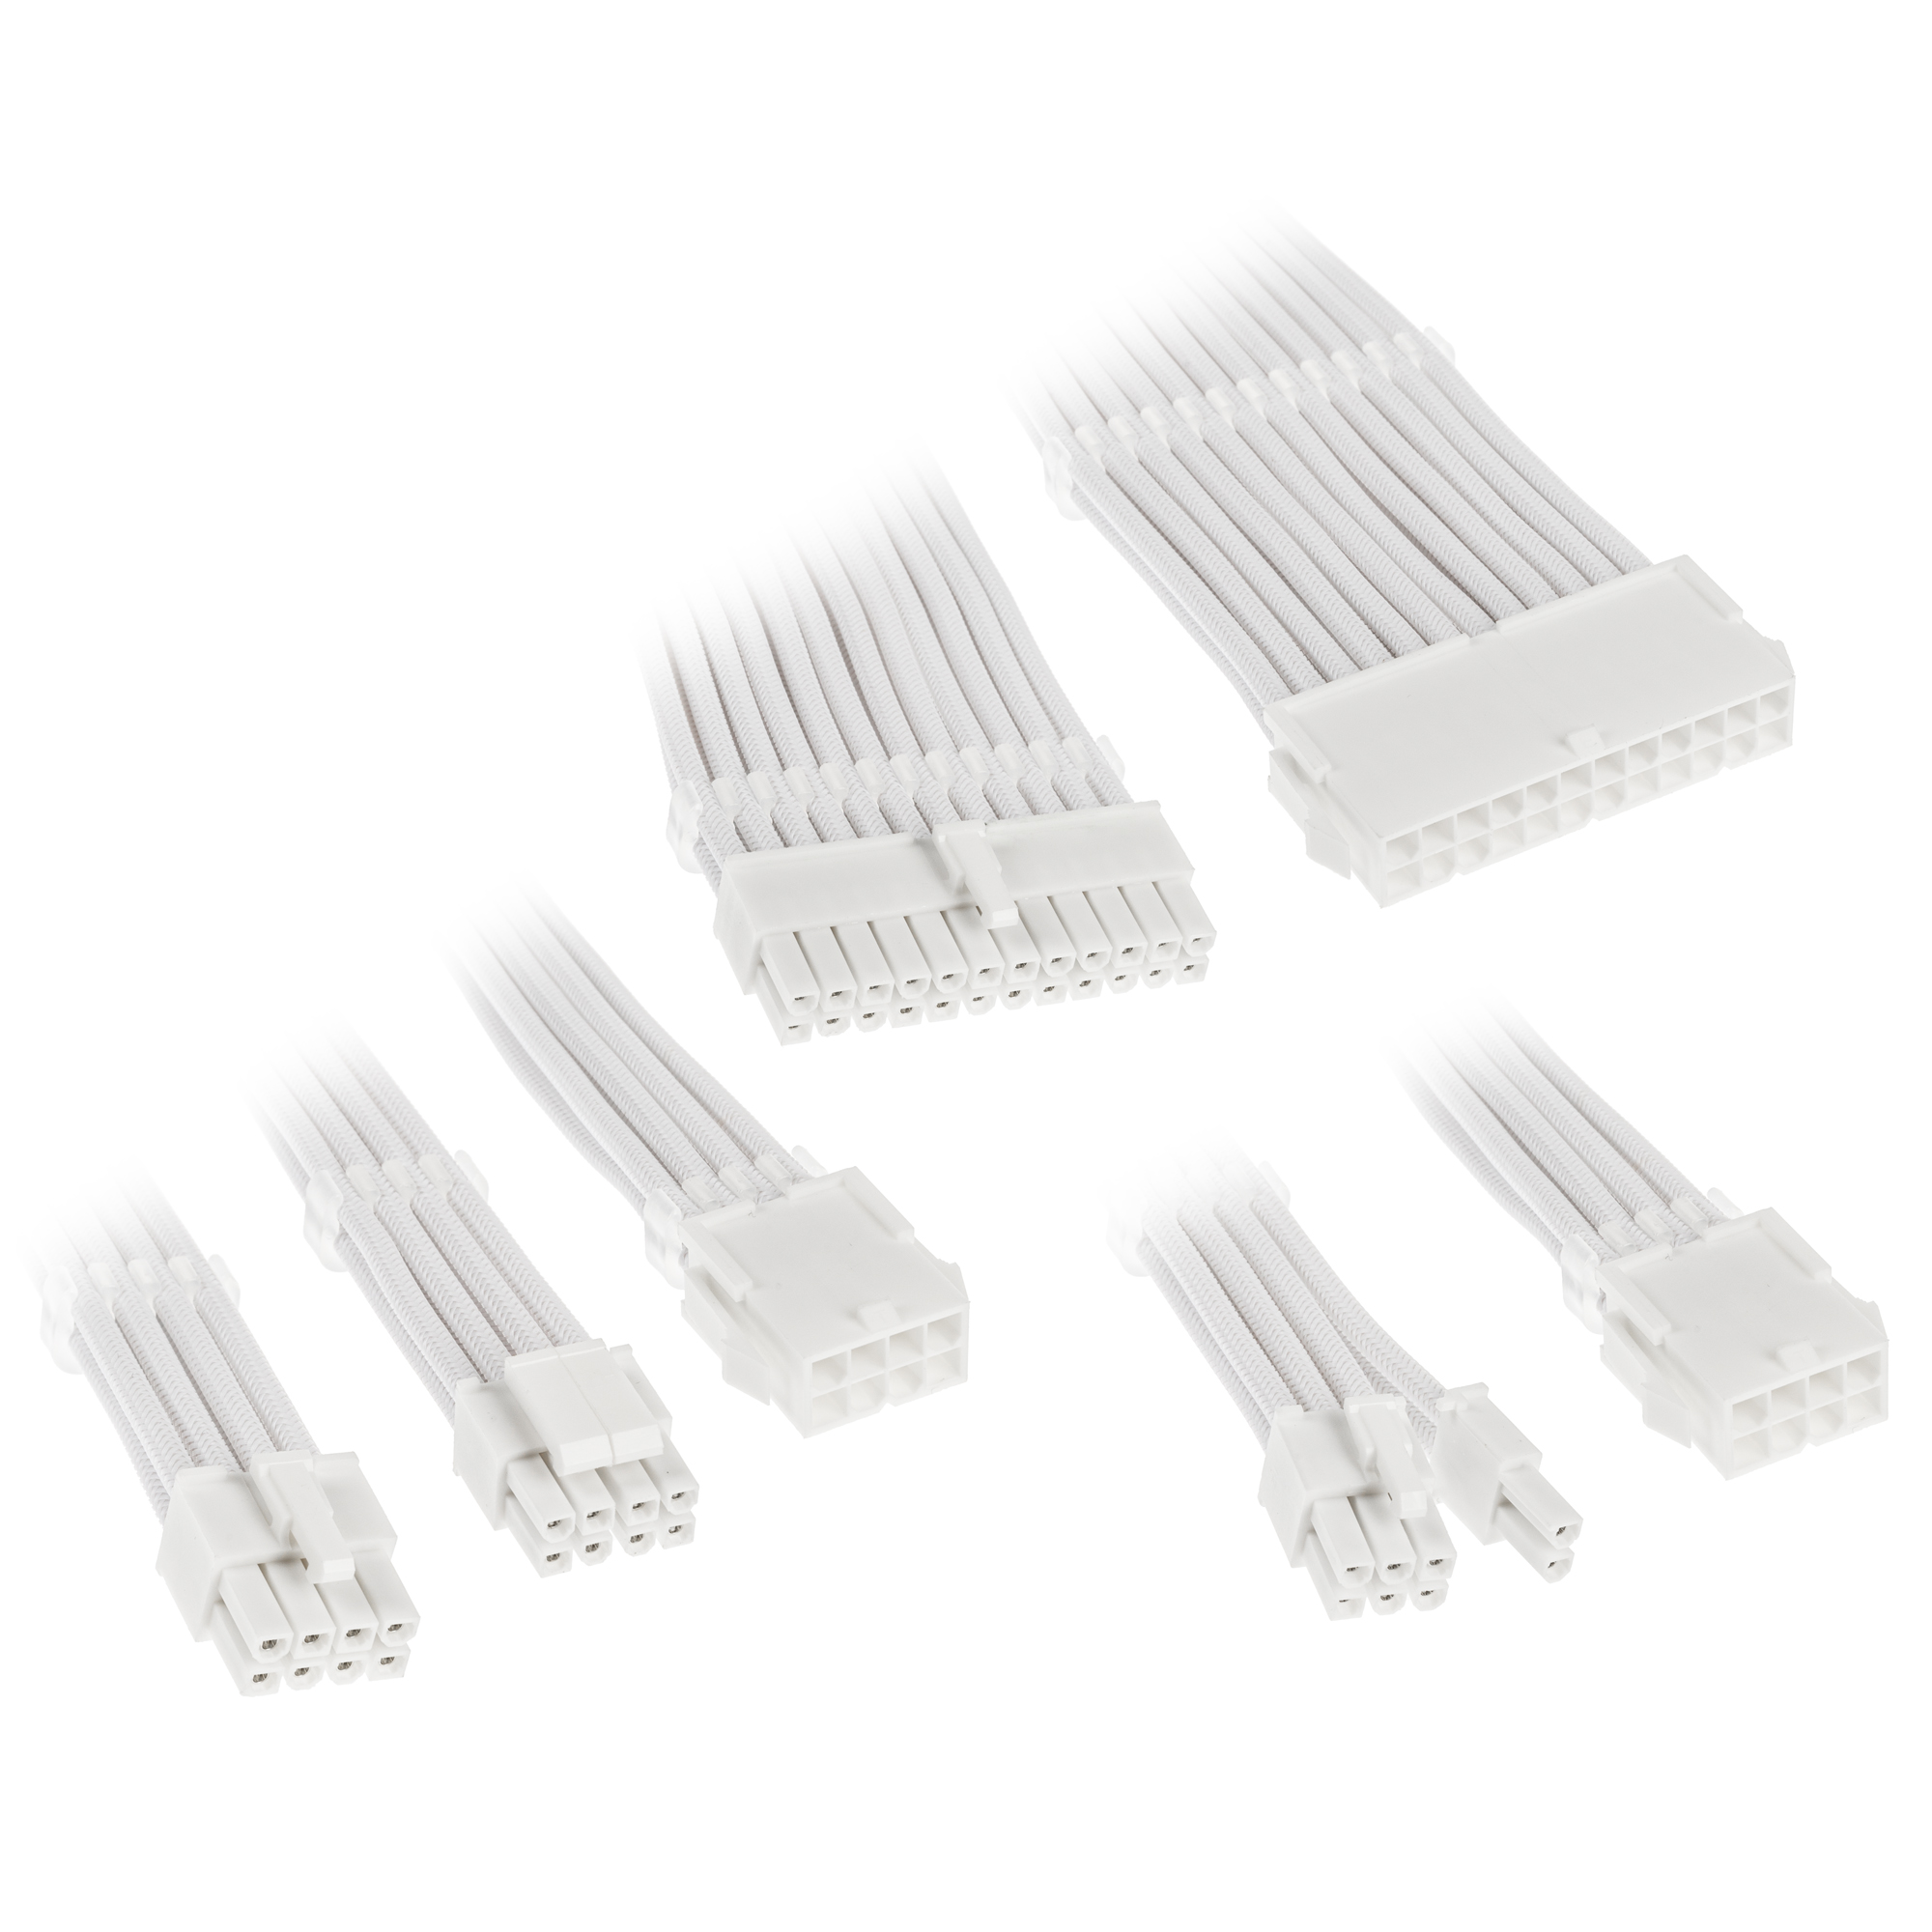 B Grade Kolink Core Adept Braided Cable Extension Kit - Brilliant White